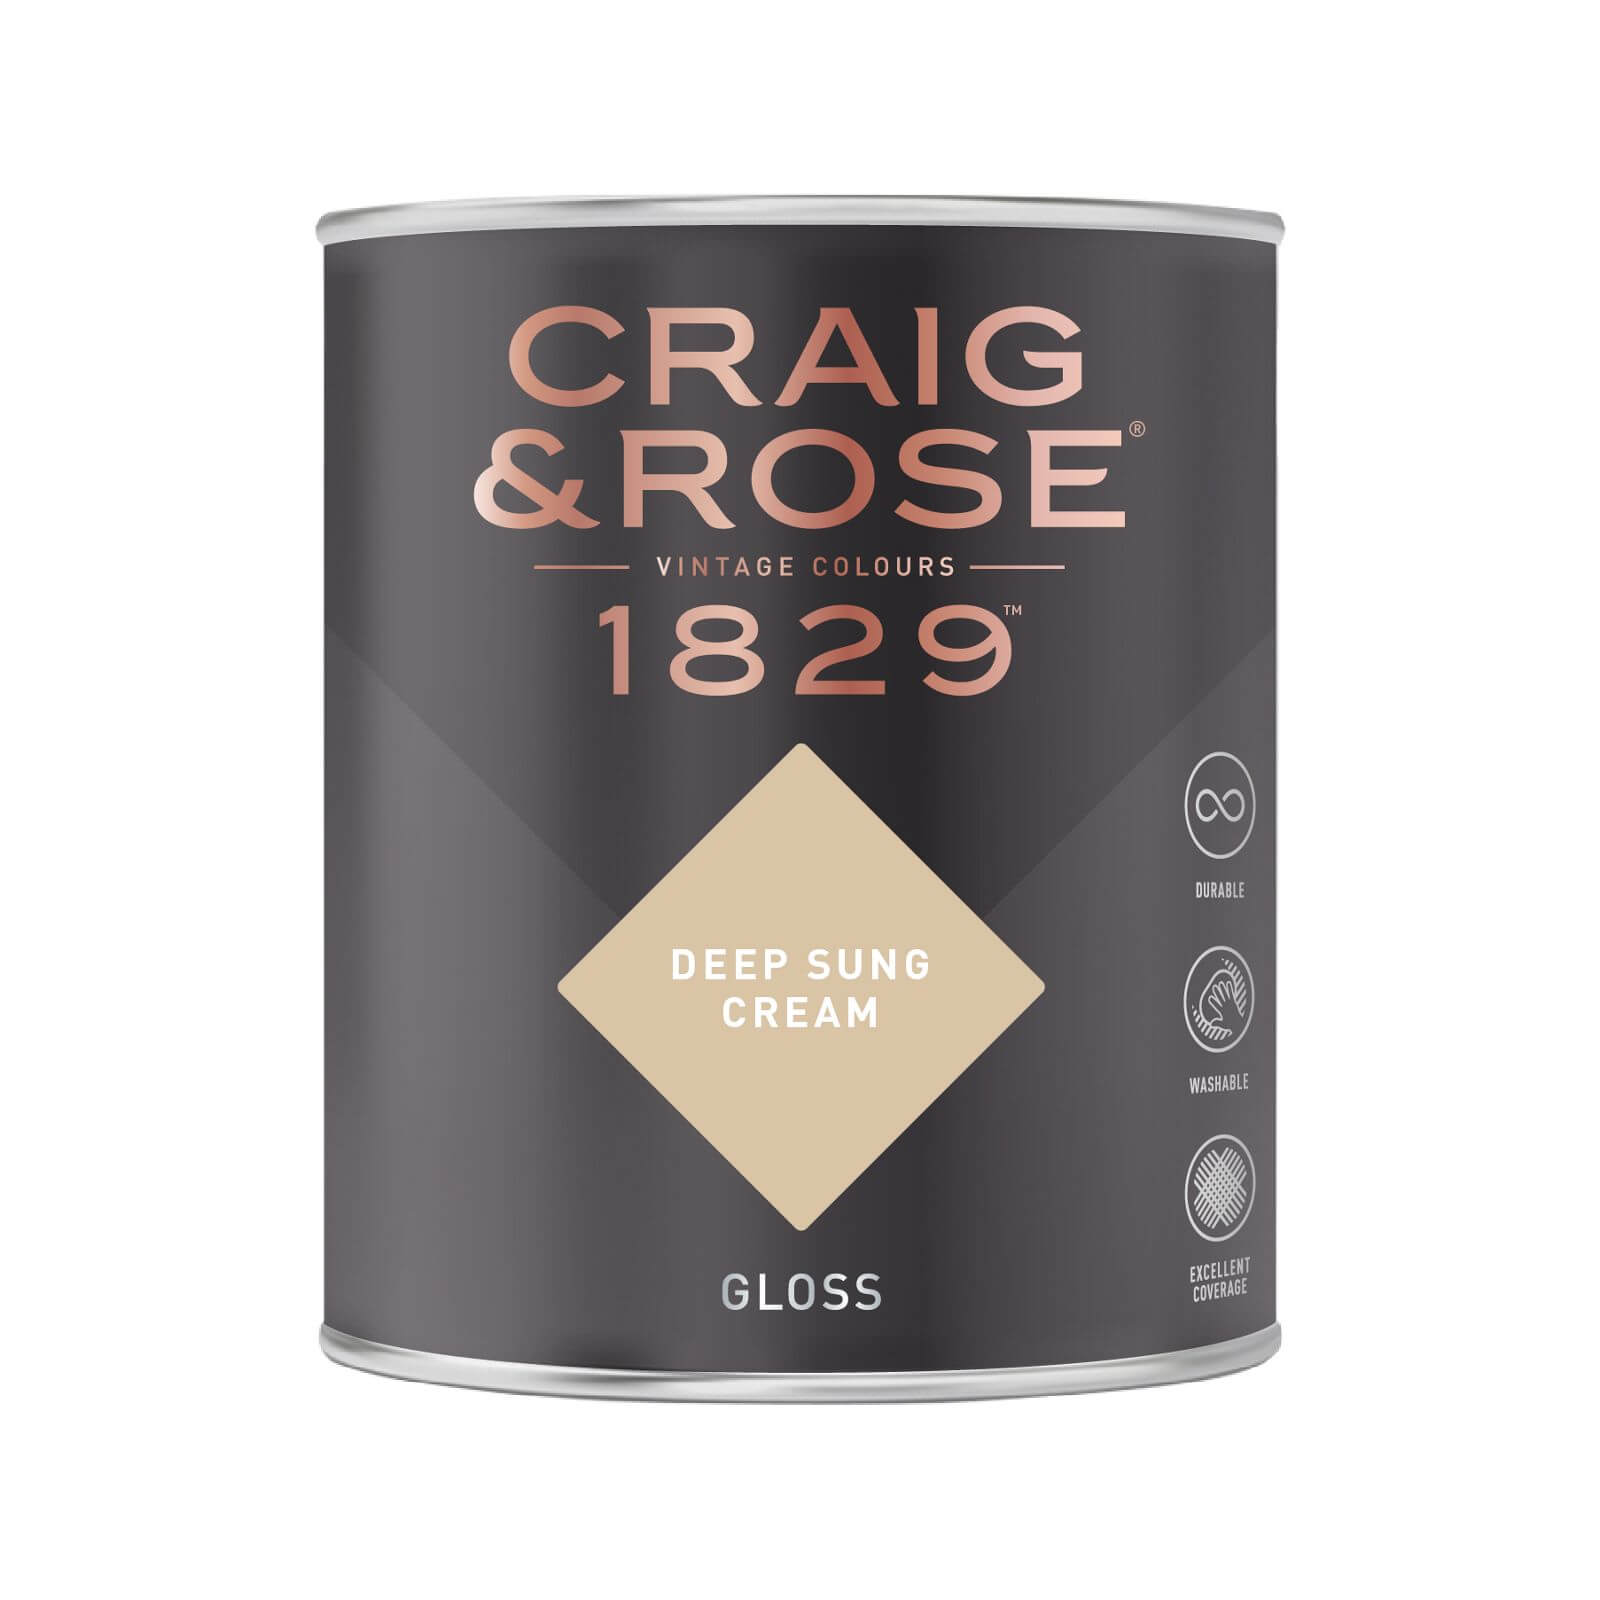 Craig & Rose 1829 Gloss Paint Deep Sung Cream -750ml